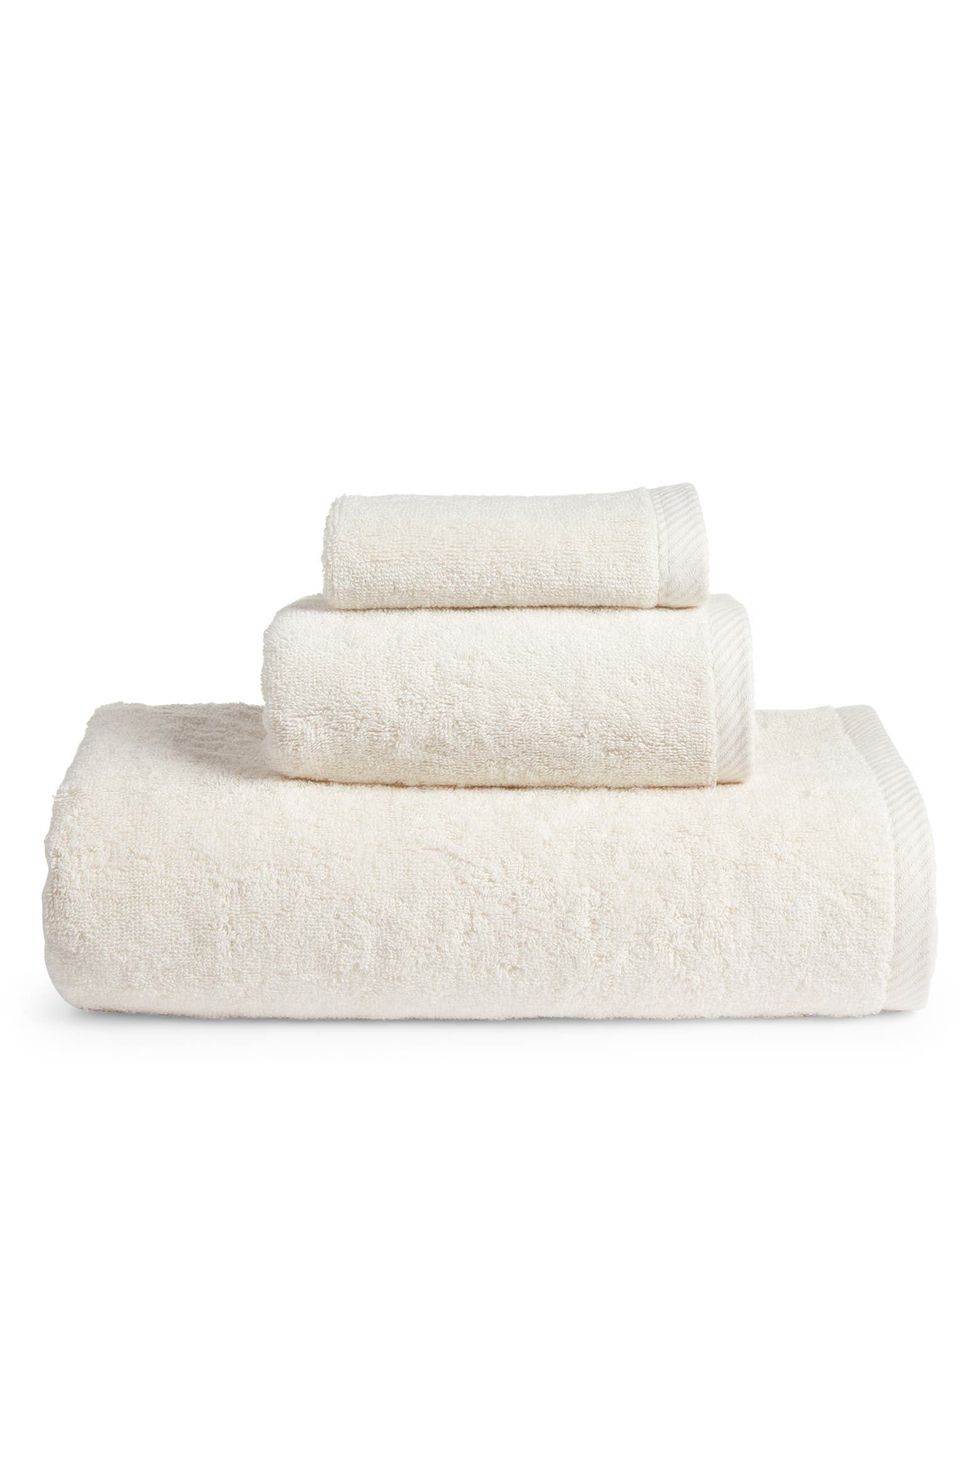 Nordstrom Repreve Bath Towel in Beige Oatmeal 